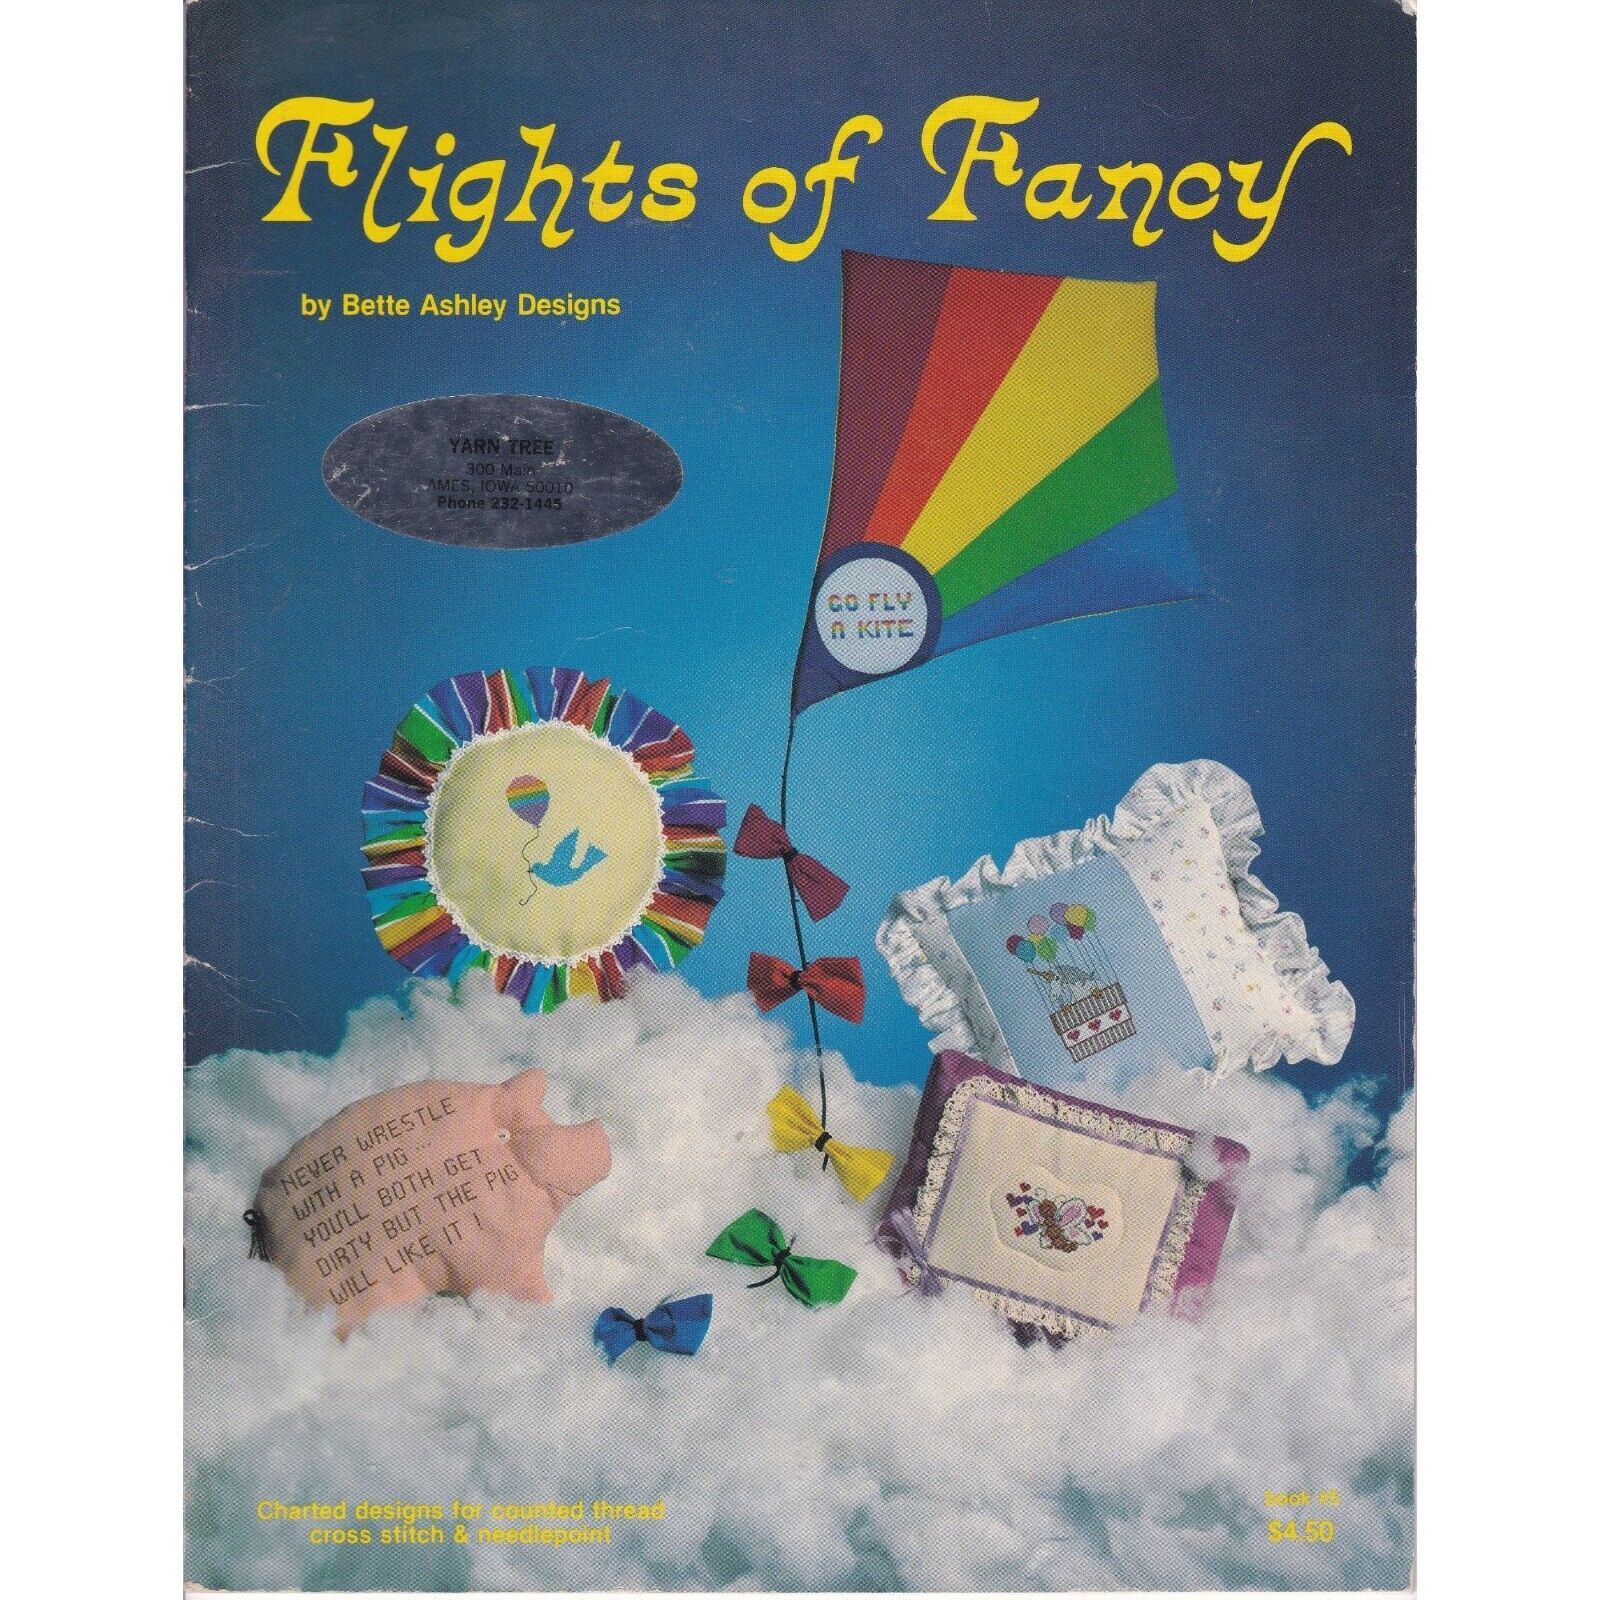 Vintage Cross Stitch Patterns, Flights of Fancy by Bette Ashley Designs Book 5 - $11.65